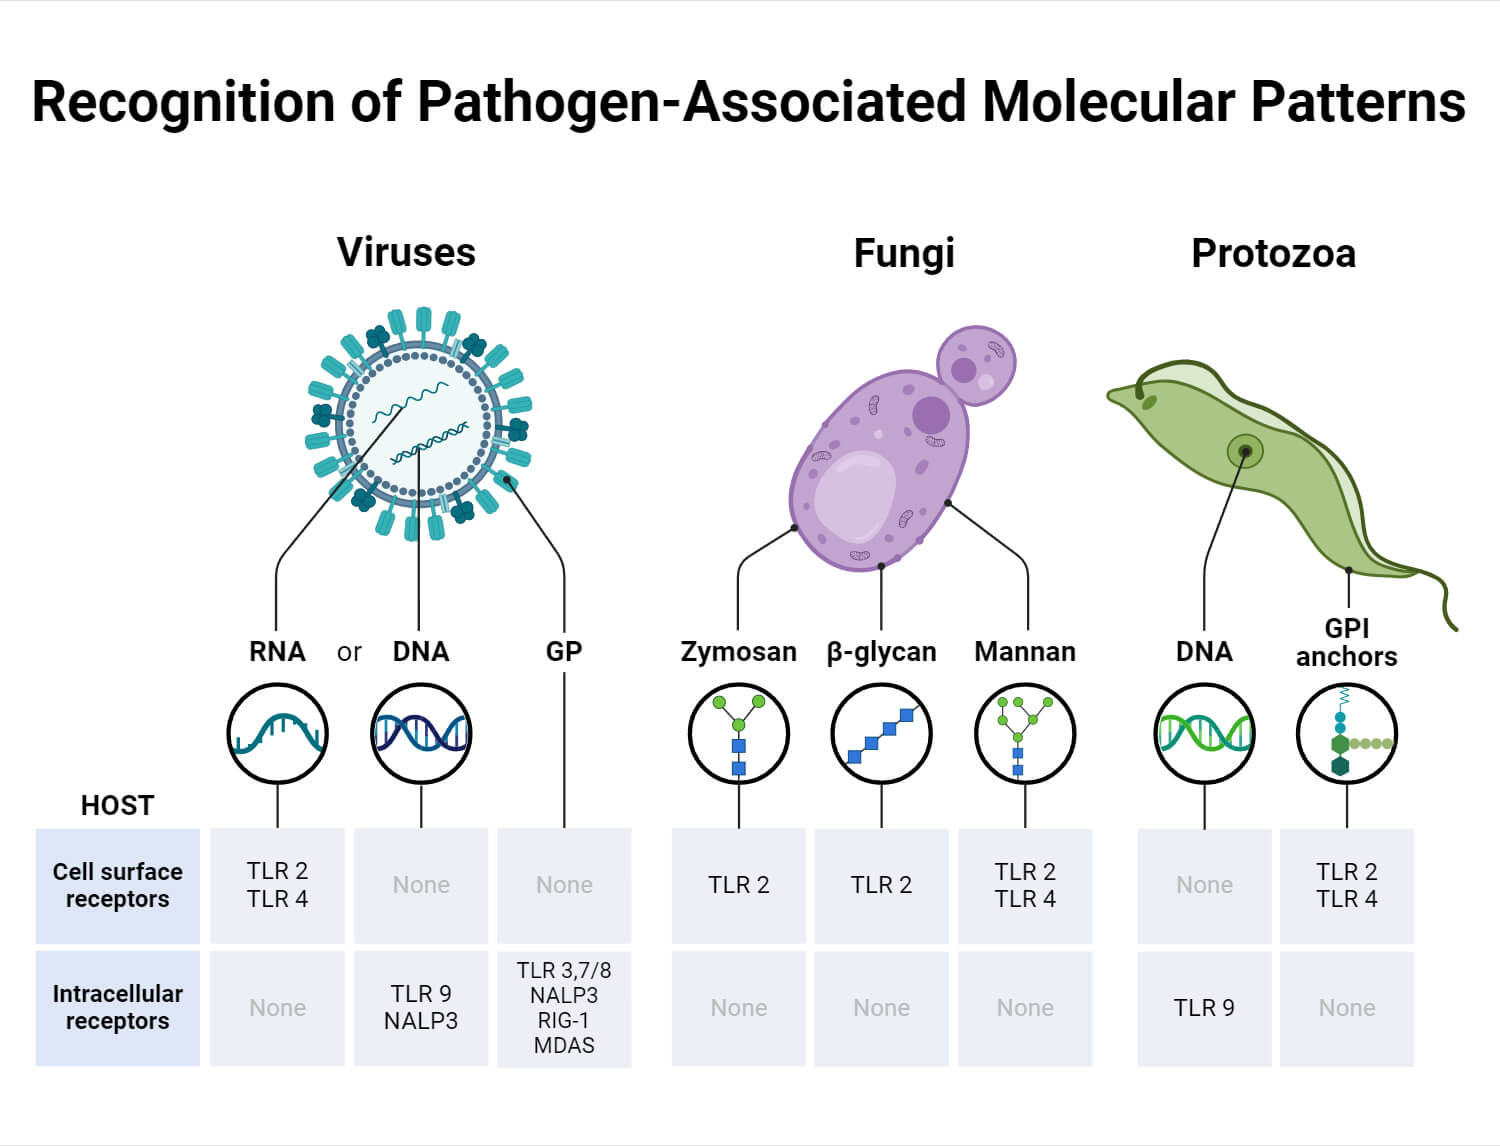 Recognition of Pathogen-Associated Molecular Patterns (Virus, Fungi, Protozoa)